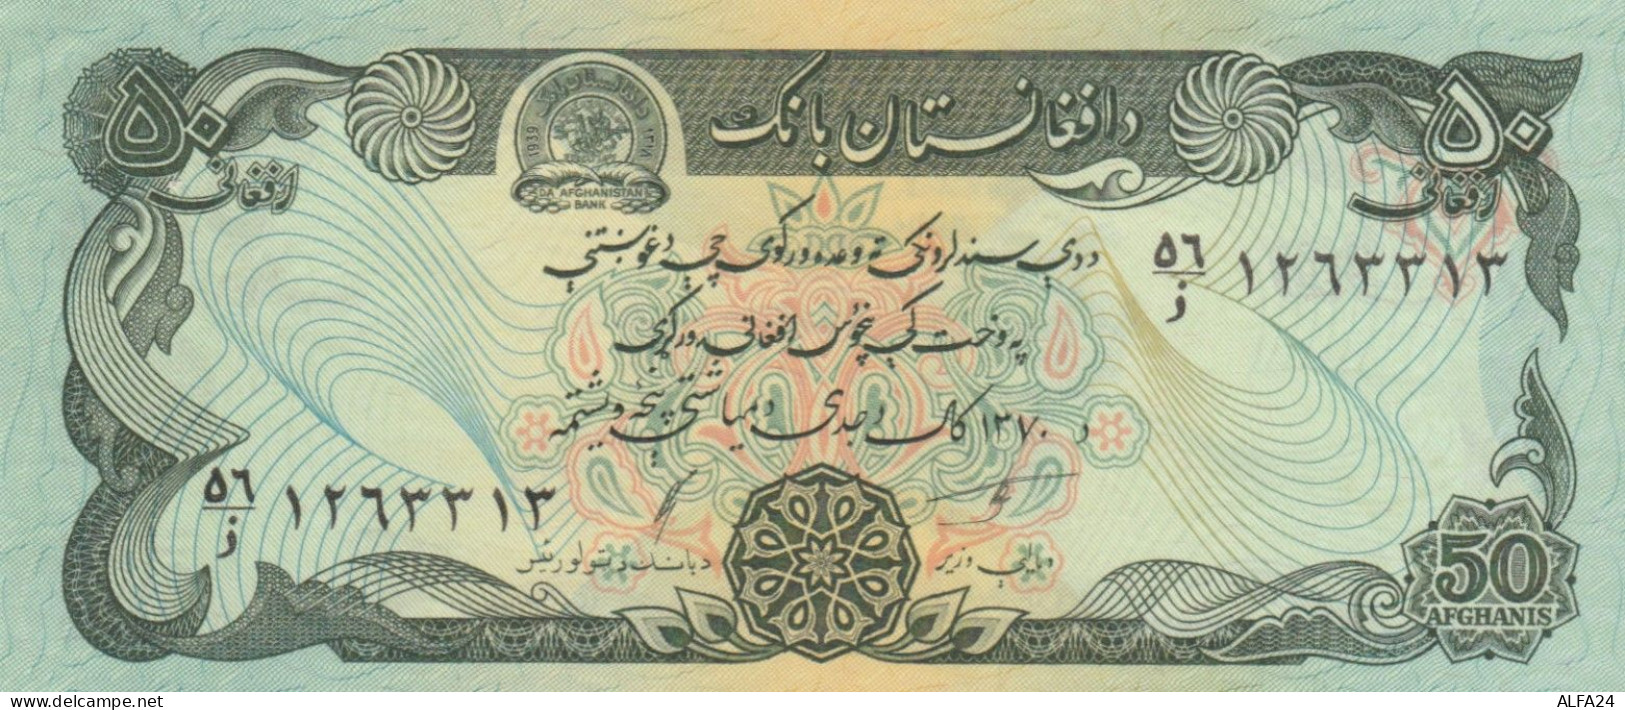 BANCONOTA AFGHANISTAN 50 UNC (RY1264 - Afghanistán